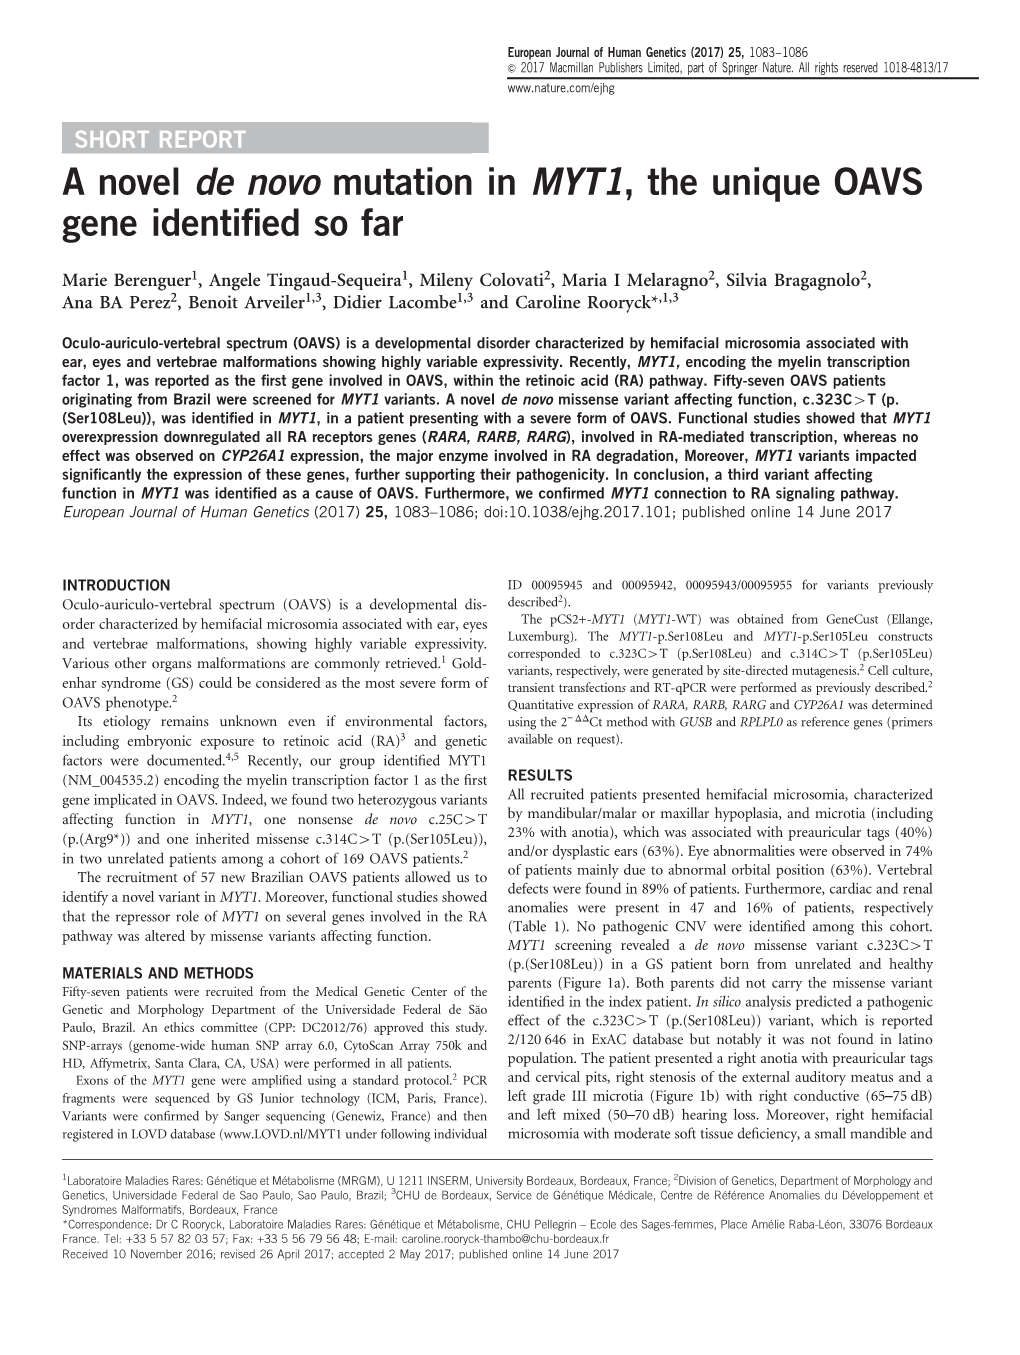 A Novel De Novo Mutation in MYT1, the Unique OAVS Gene Identified So